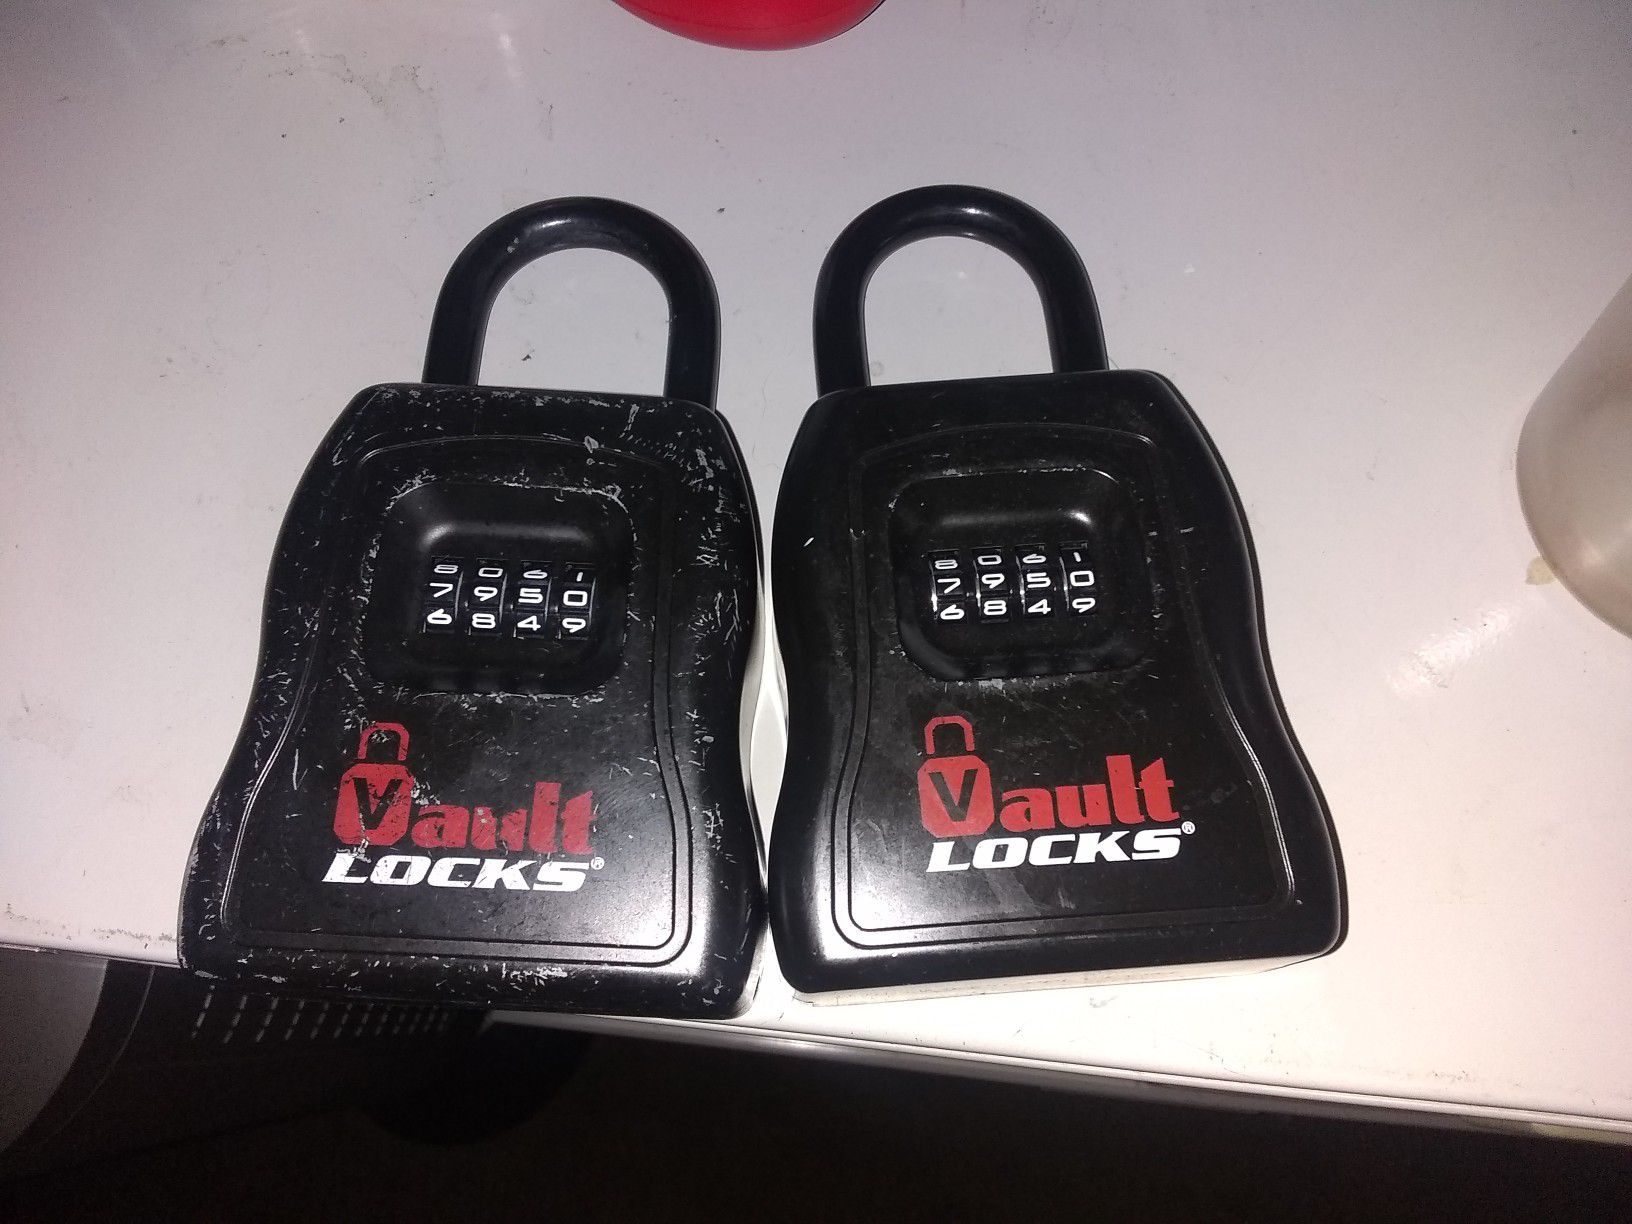 Vault locks boxes 1 for $15 2 for $25